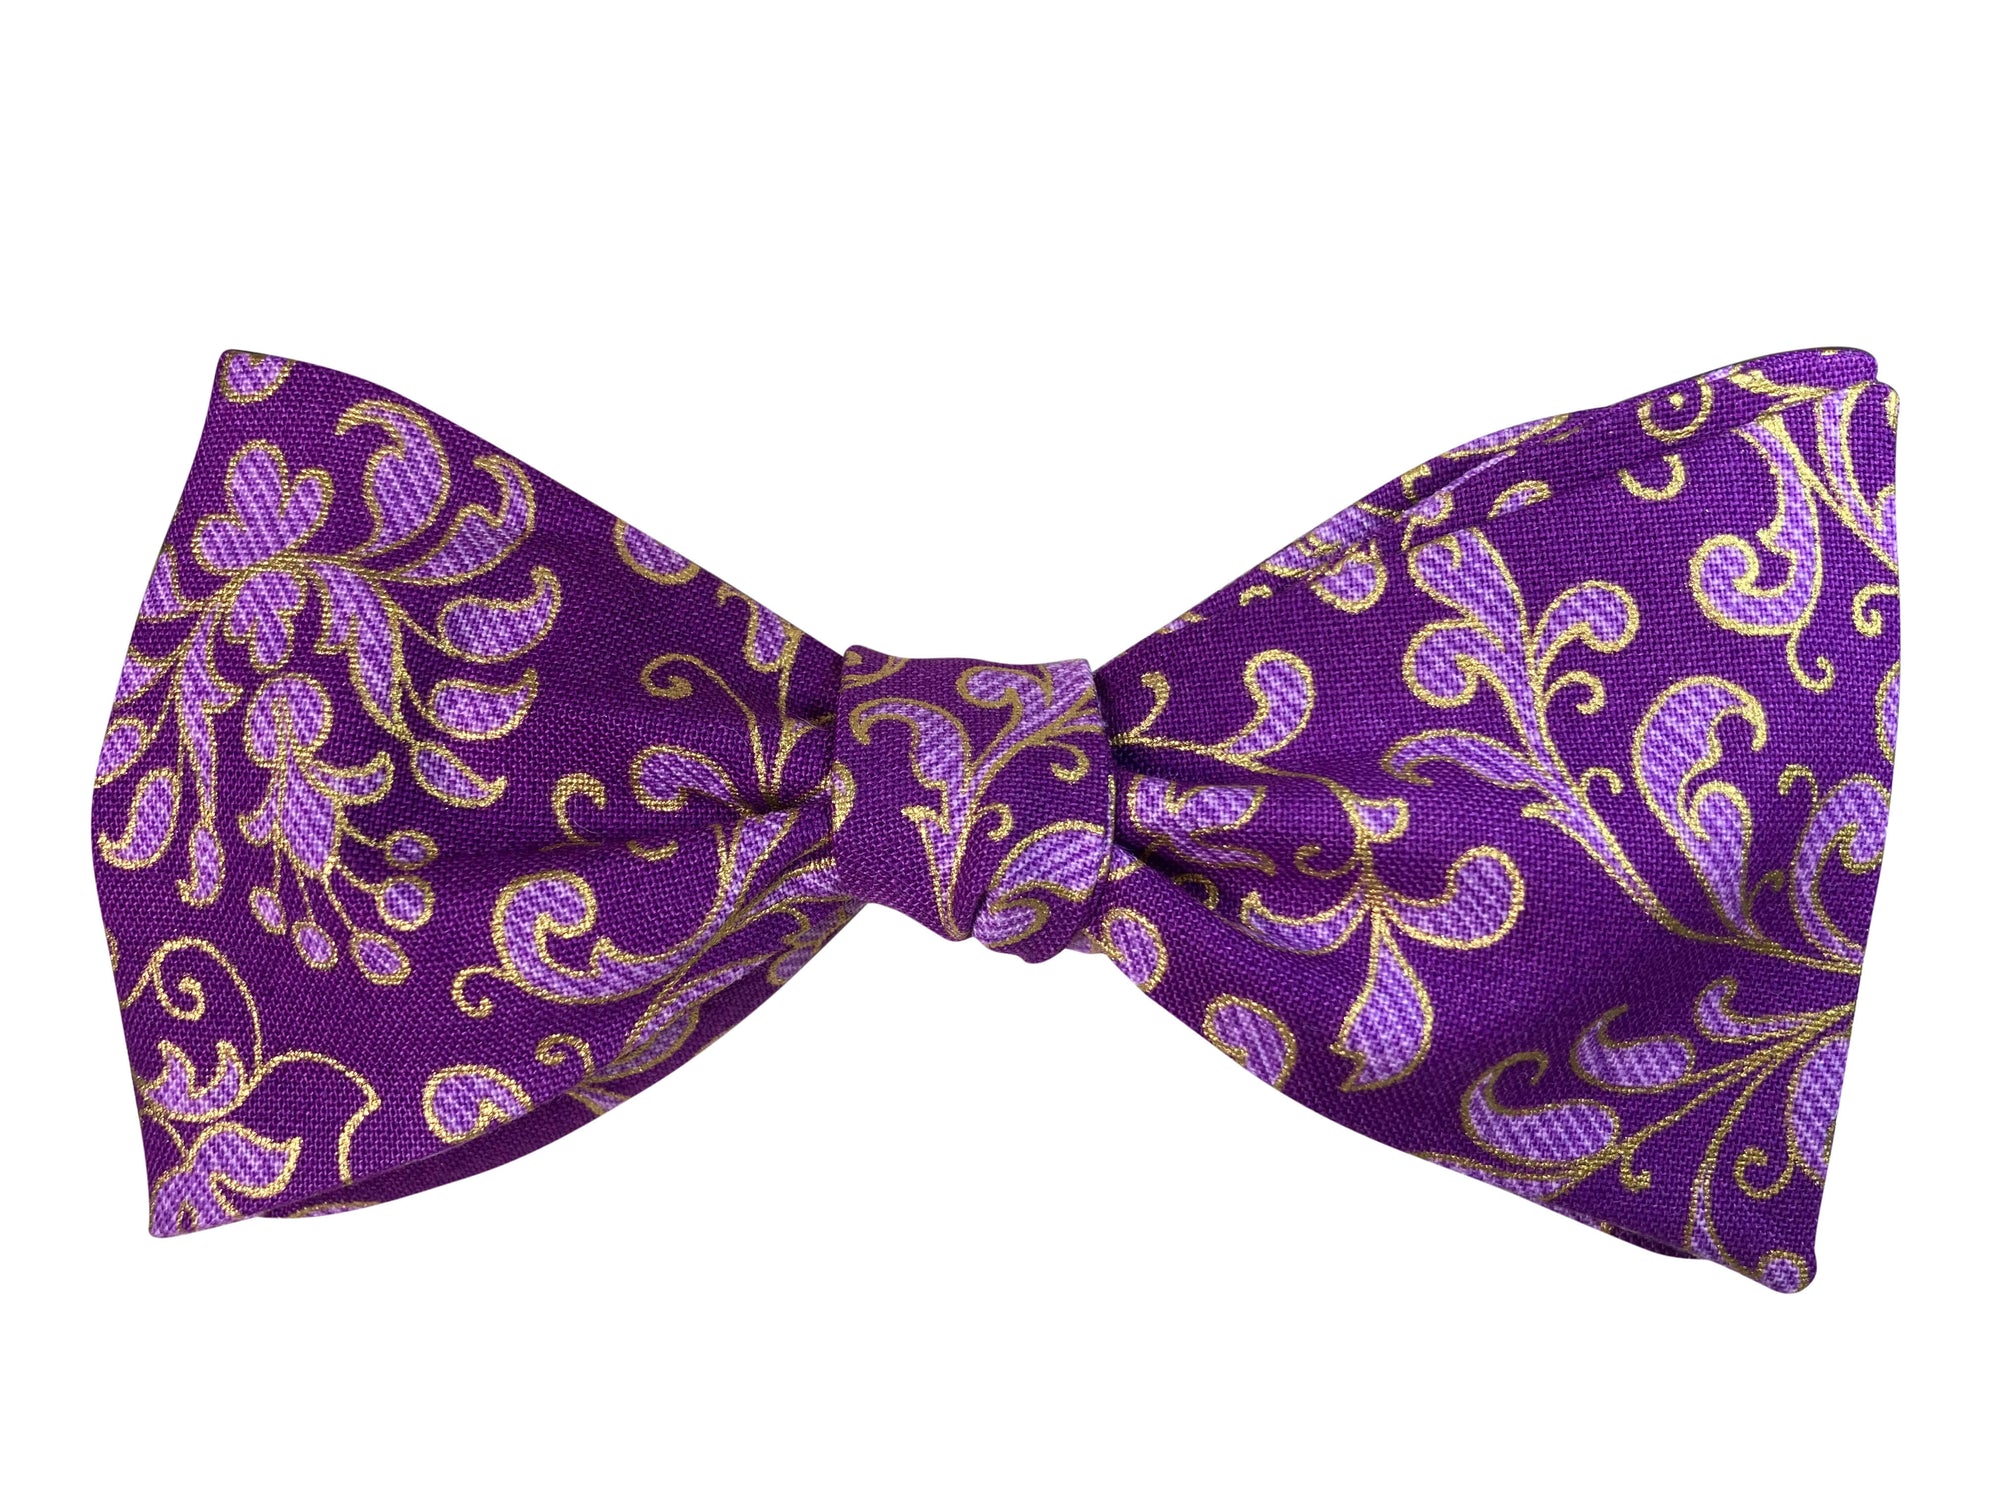 Purple and gold filigree bridgerton style self tie bow tie